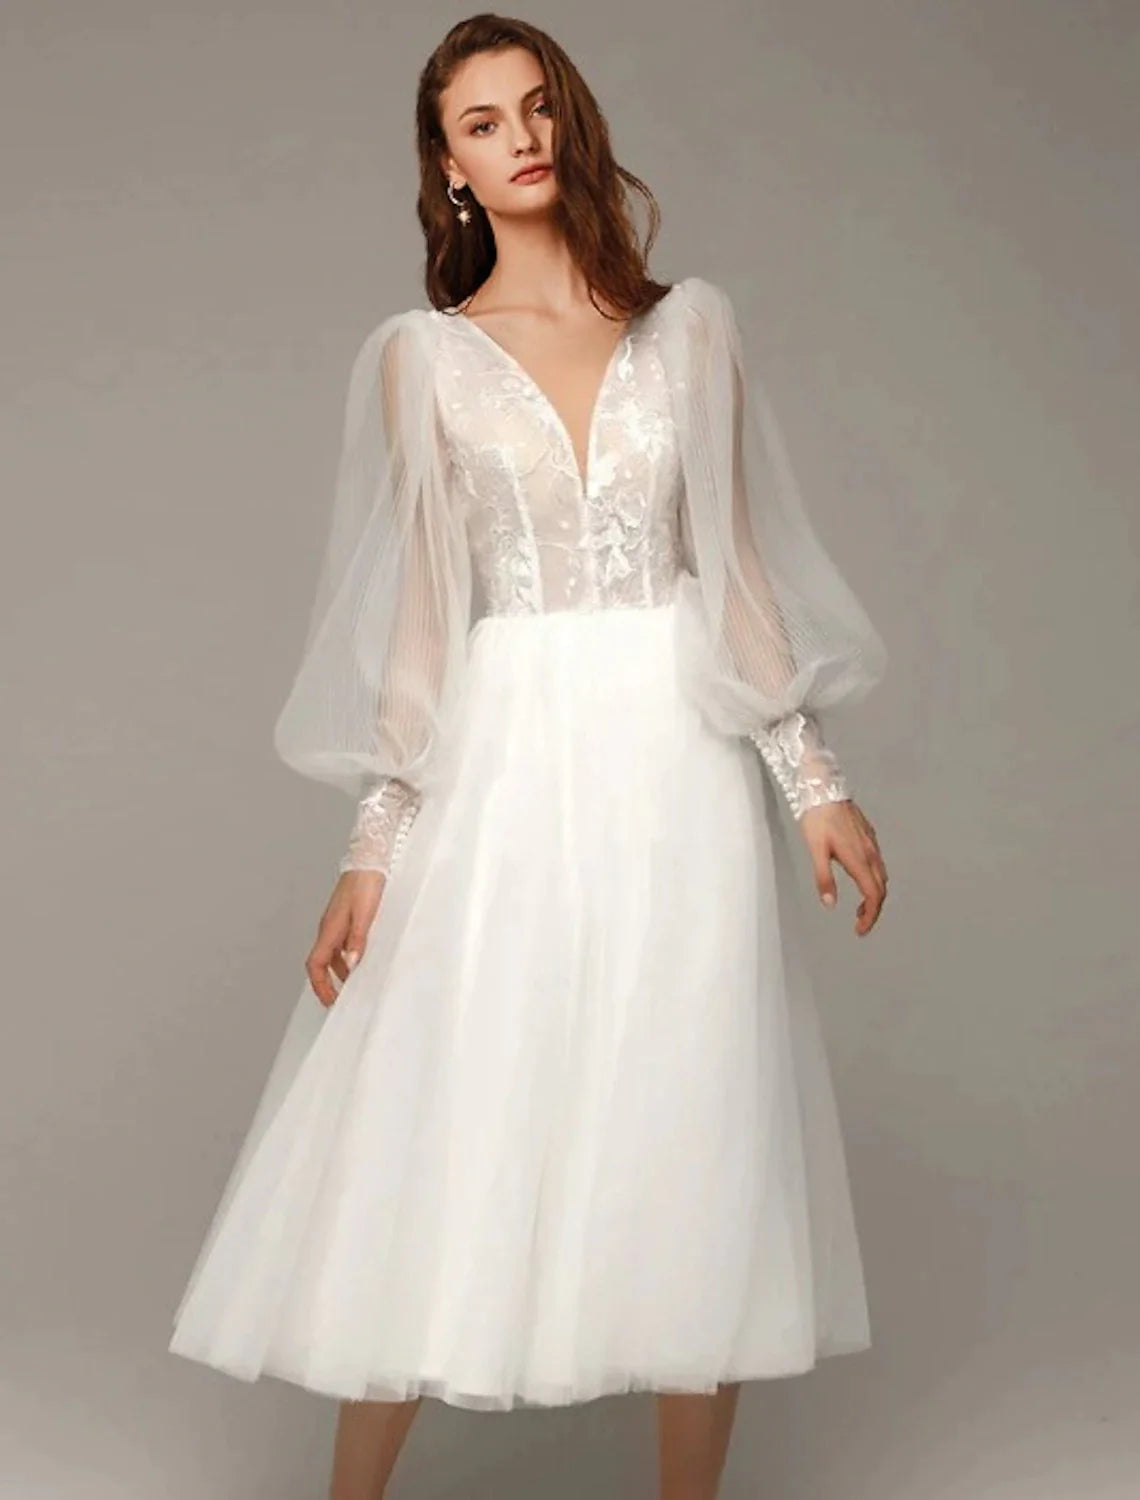 Hall Vintage 1940s / 1950s Little White Dresses Wedding Dresses A-Line V Neck Long Sleeve Tea Length Satin Bridal Gowns With Appliques Solid Color